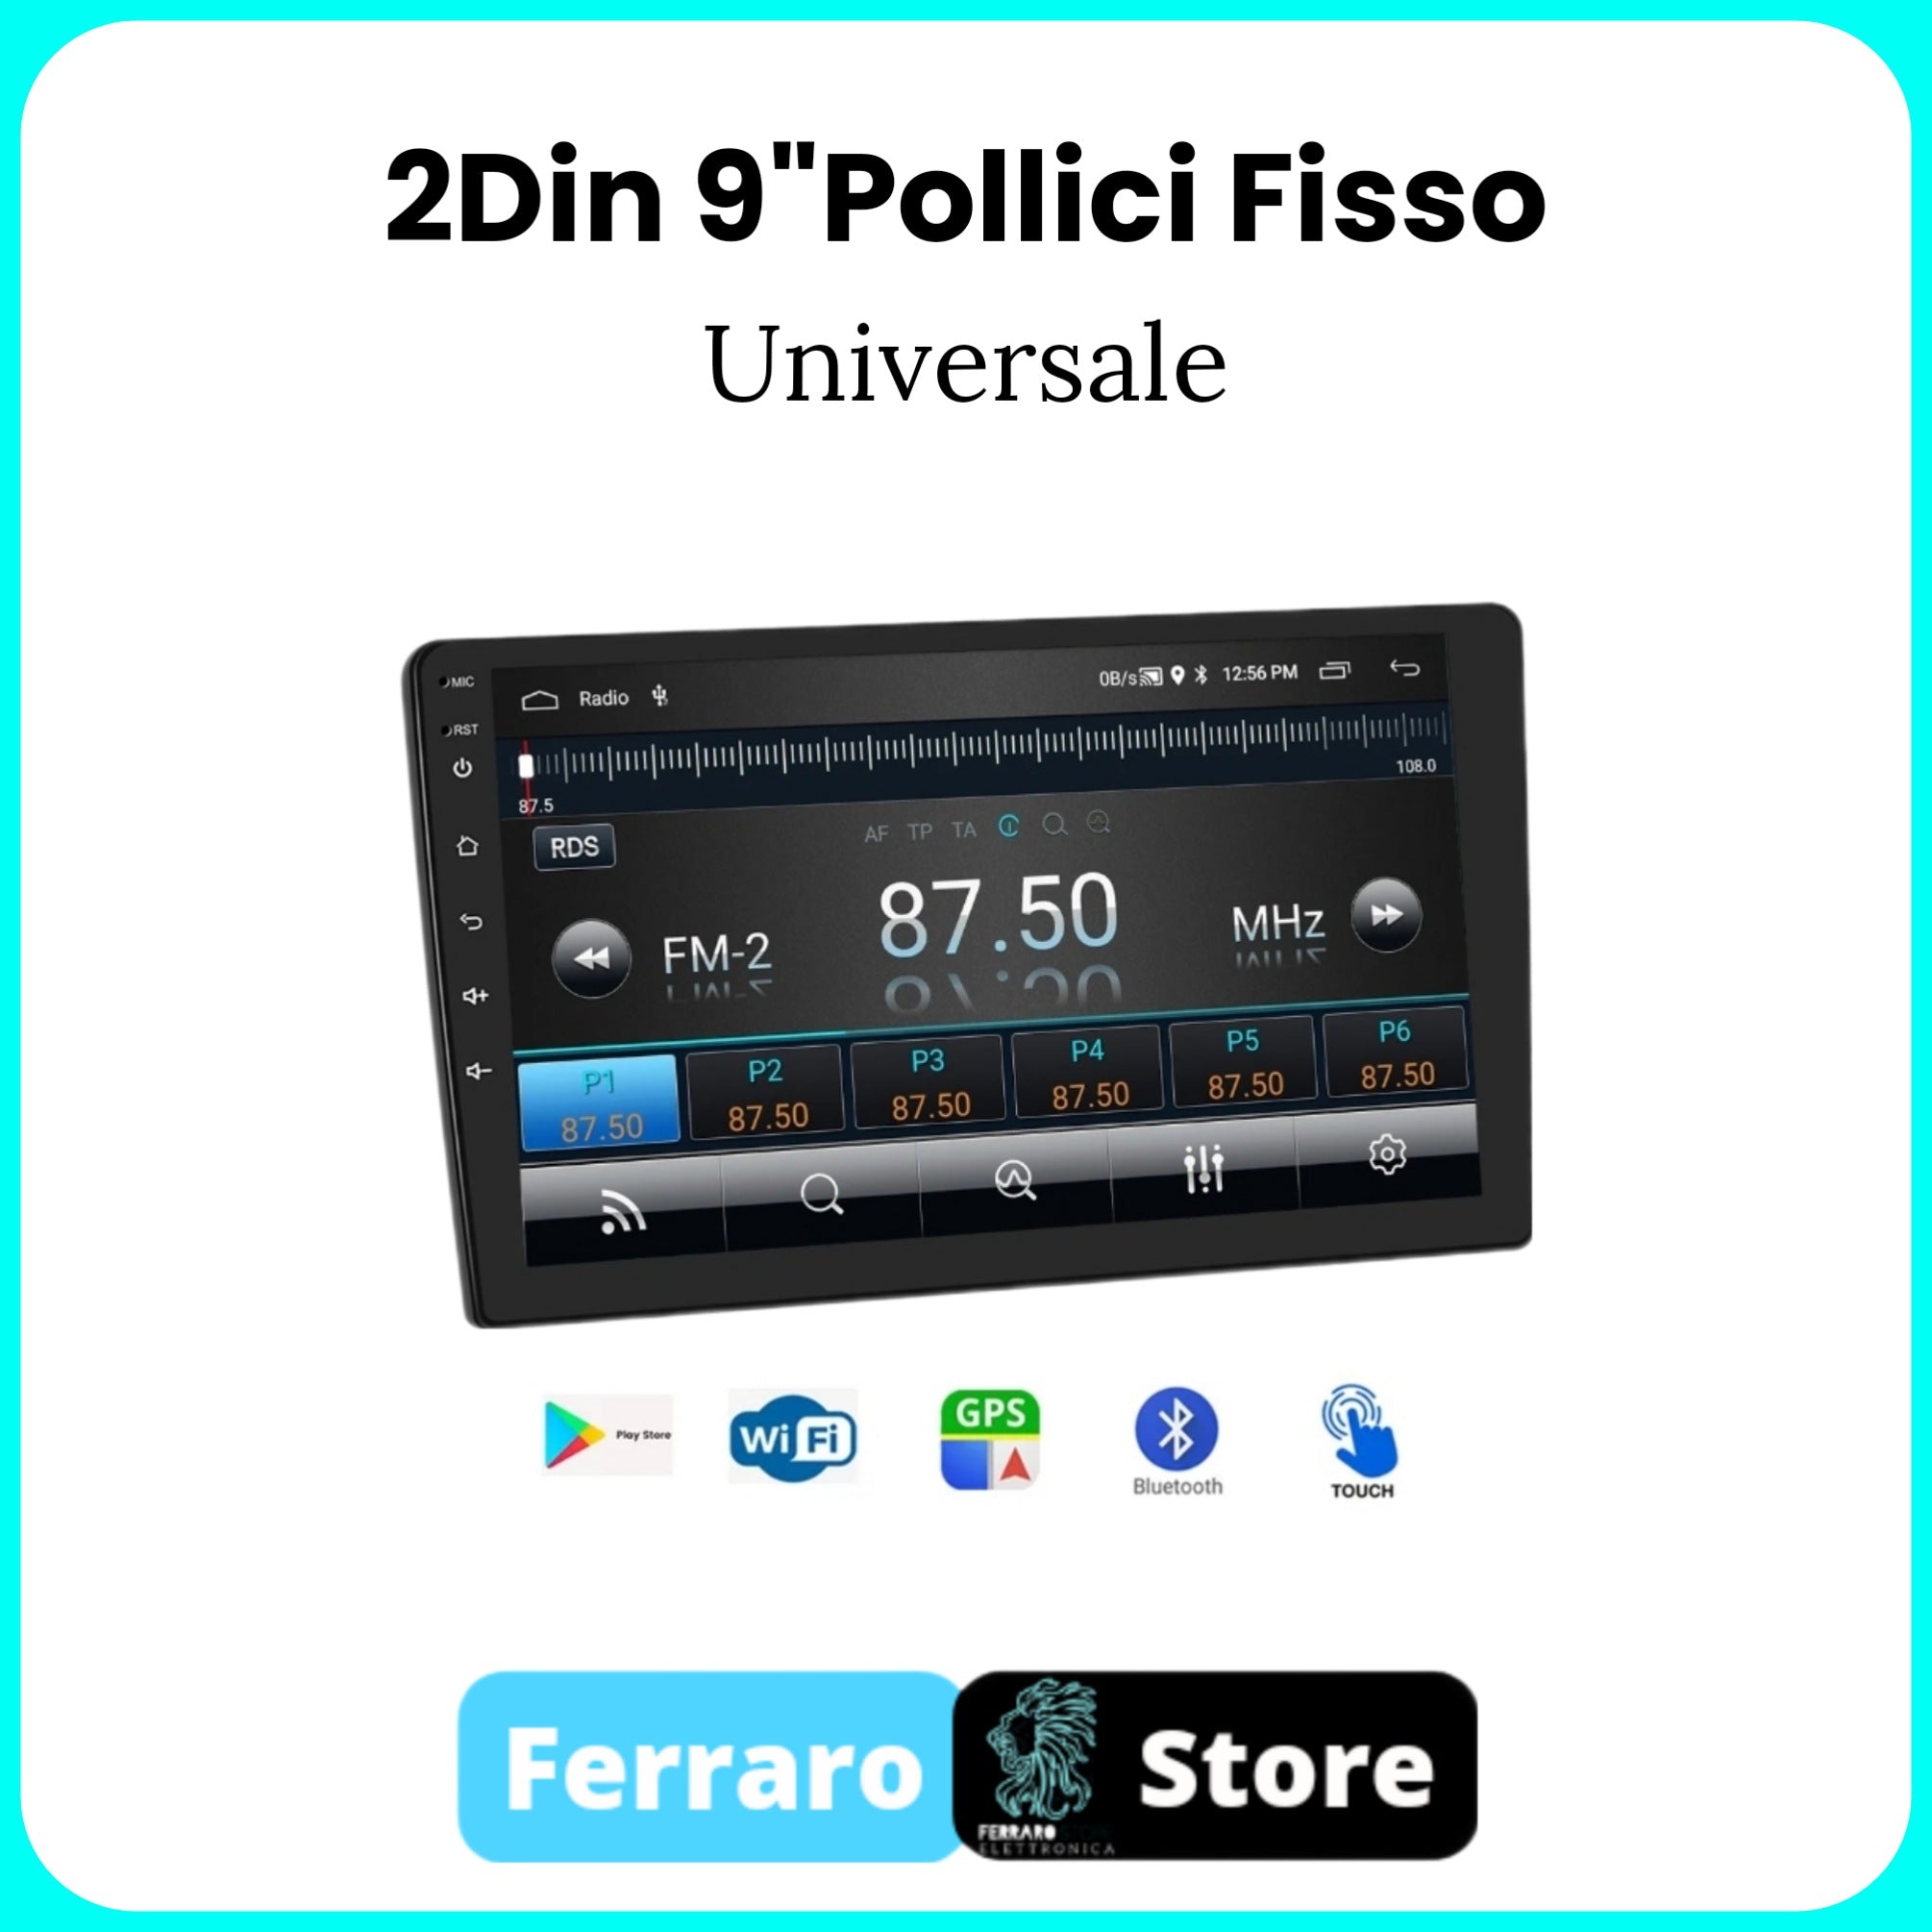 Autoradio Universale [FISSO] - 2Din 9"pollici, Bluetooth, Radio, Android, Wifi, GPS, Navigatore, Youtube, PlayStore